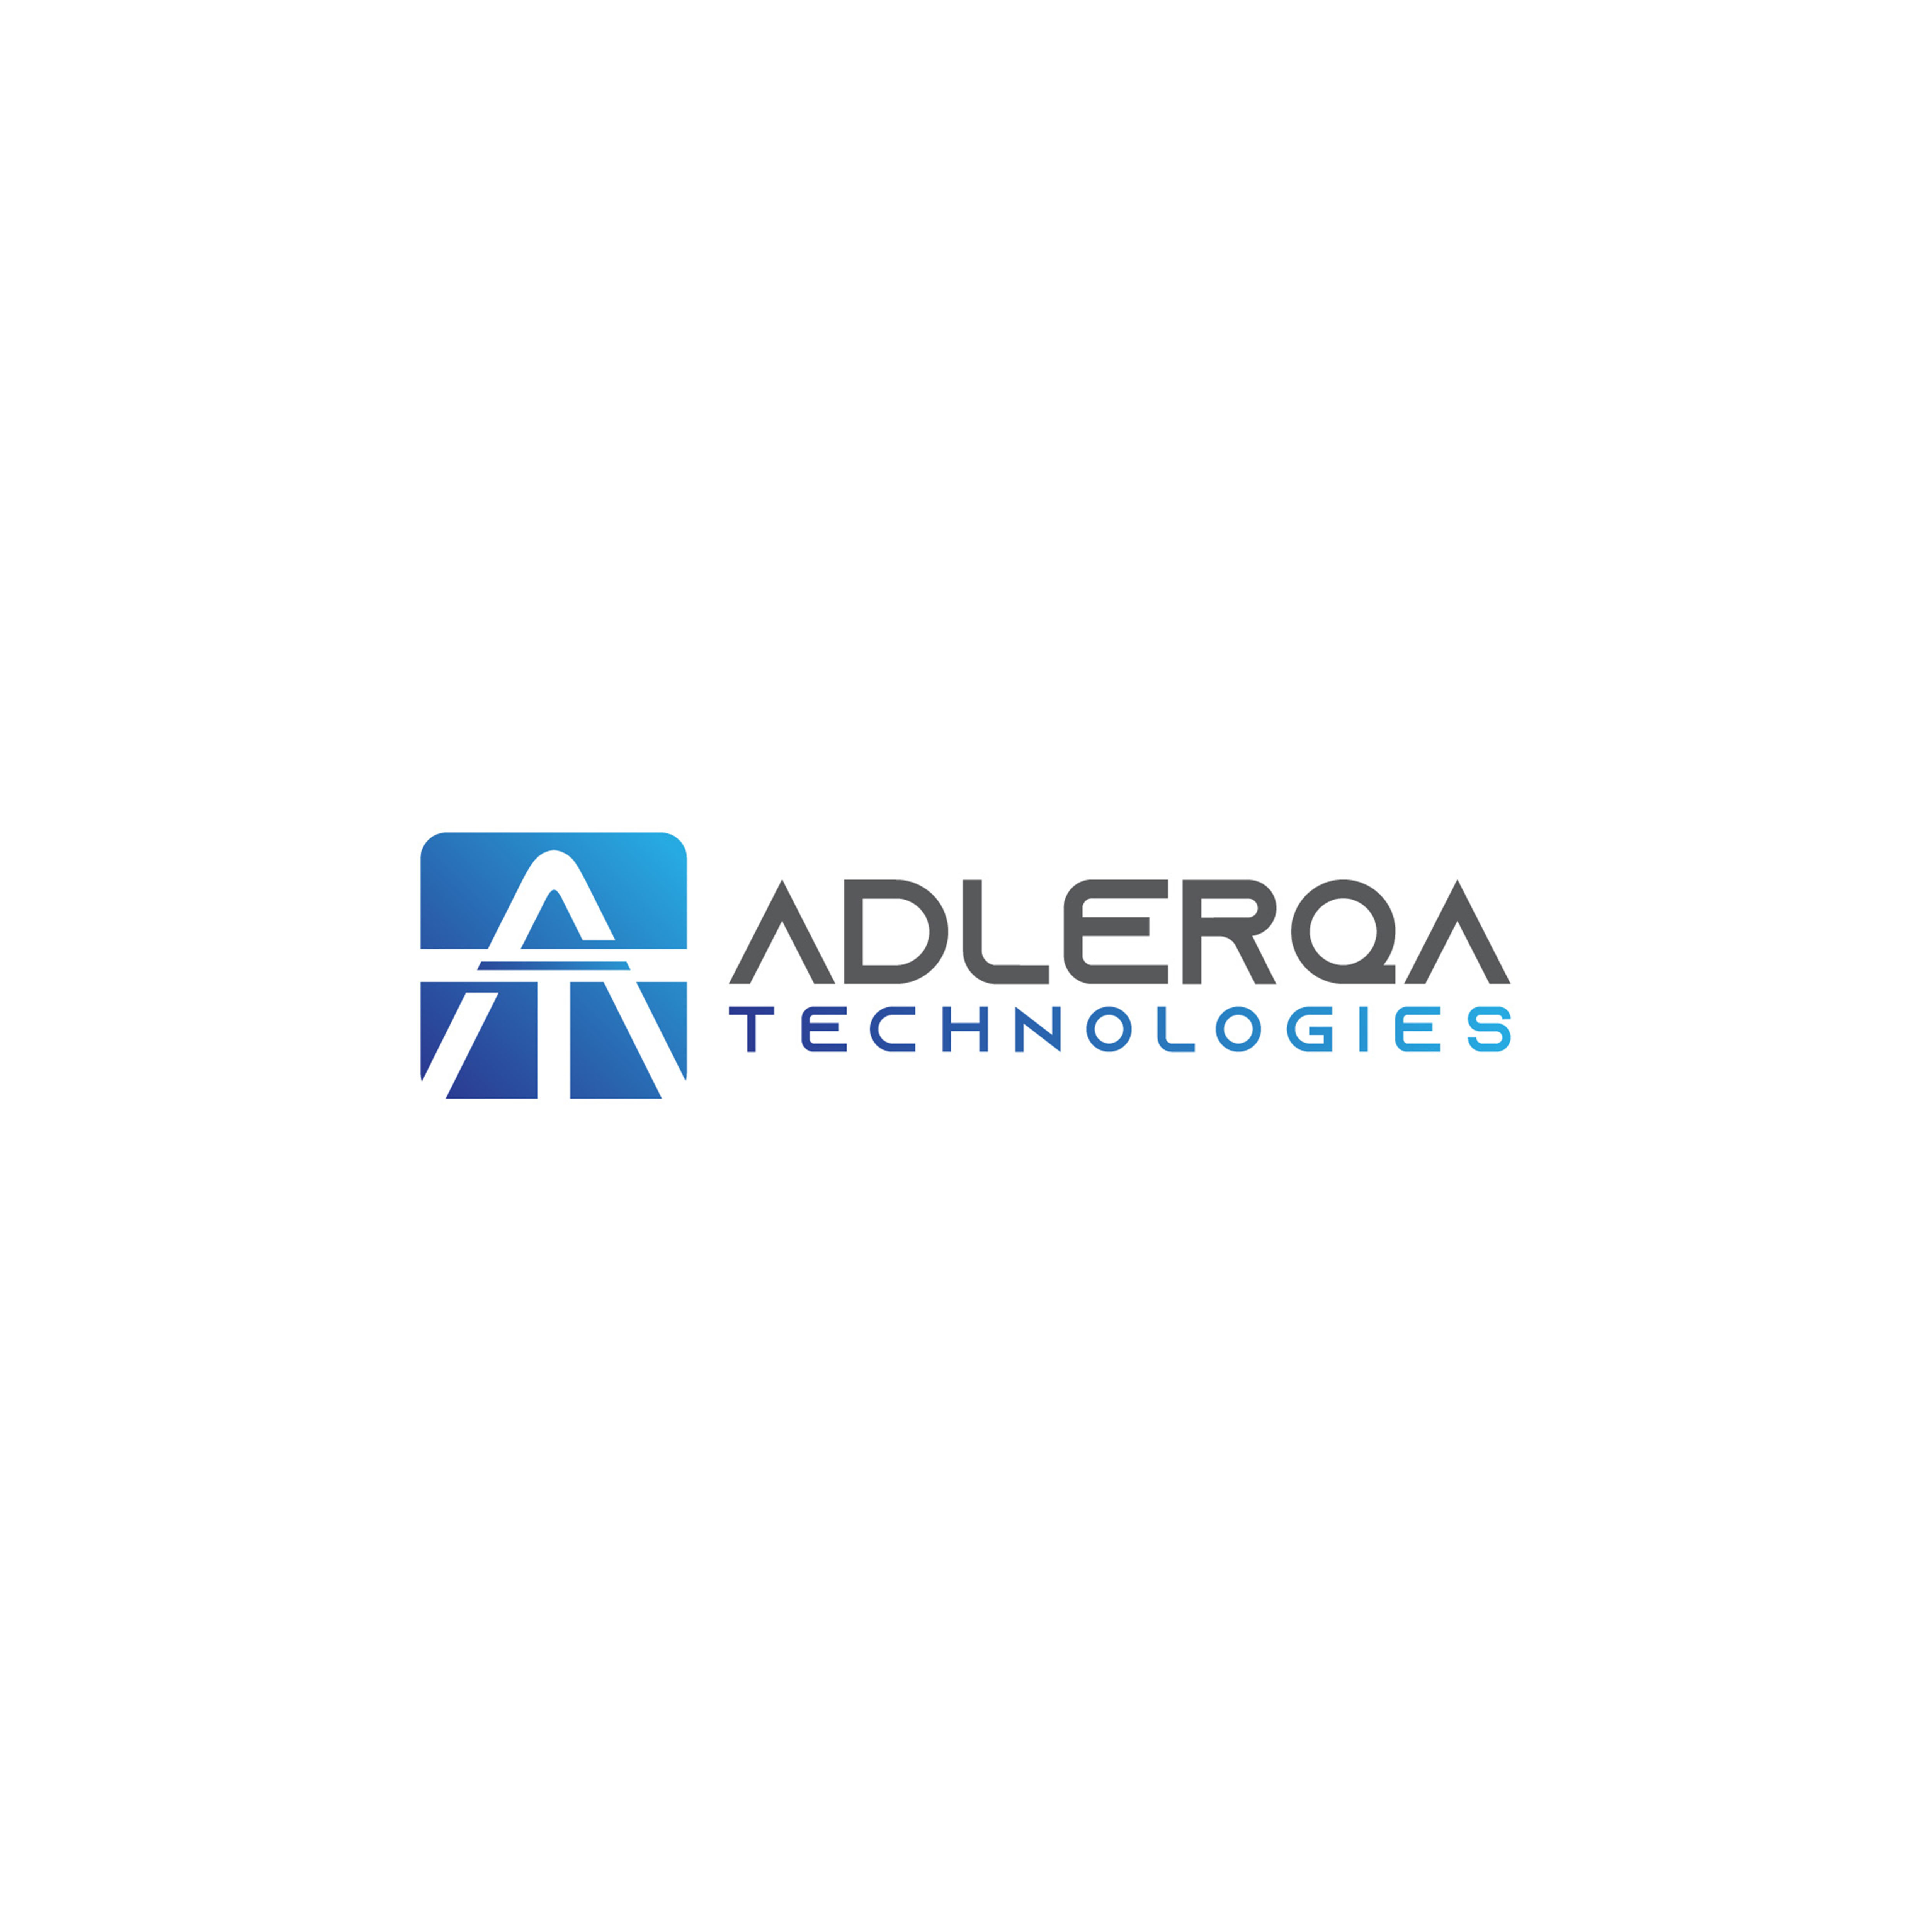 AdlerQA Technologies Pvt Ltd